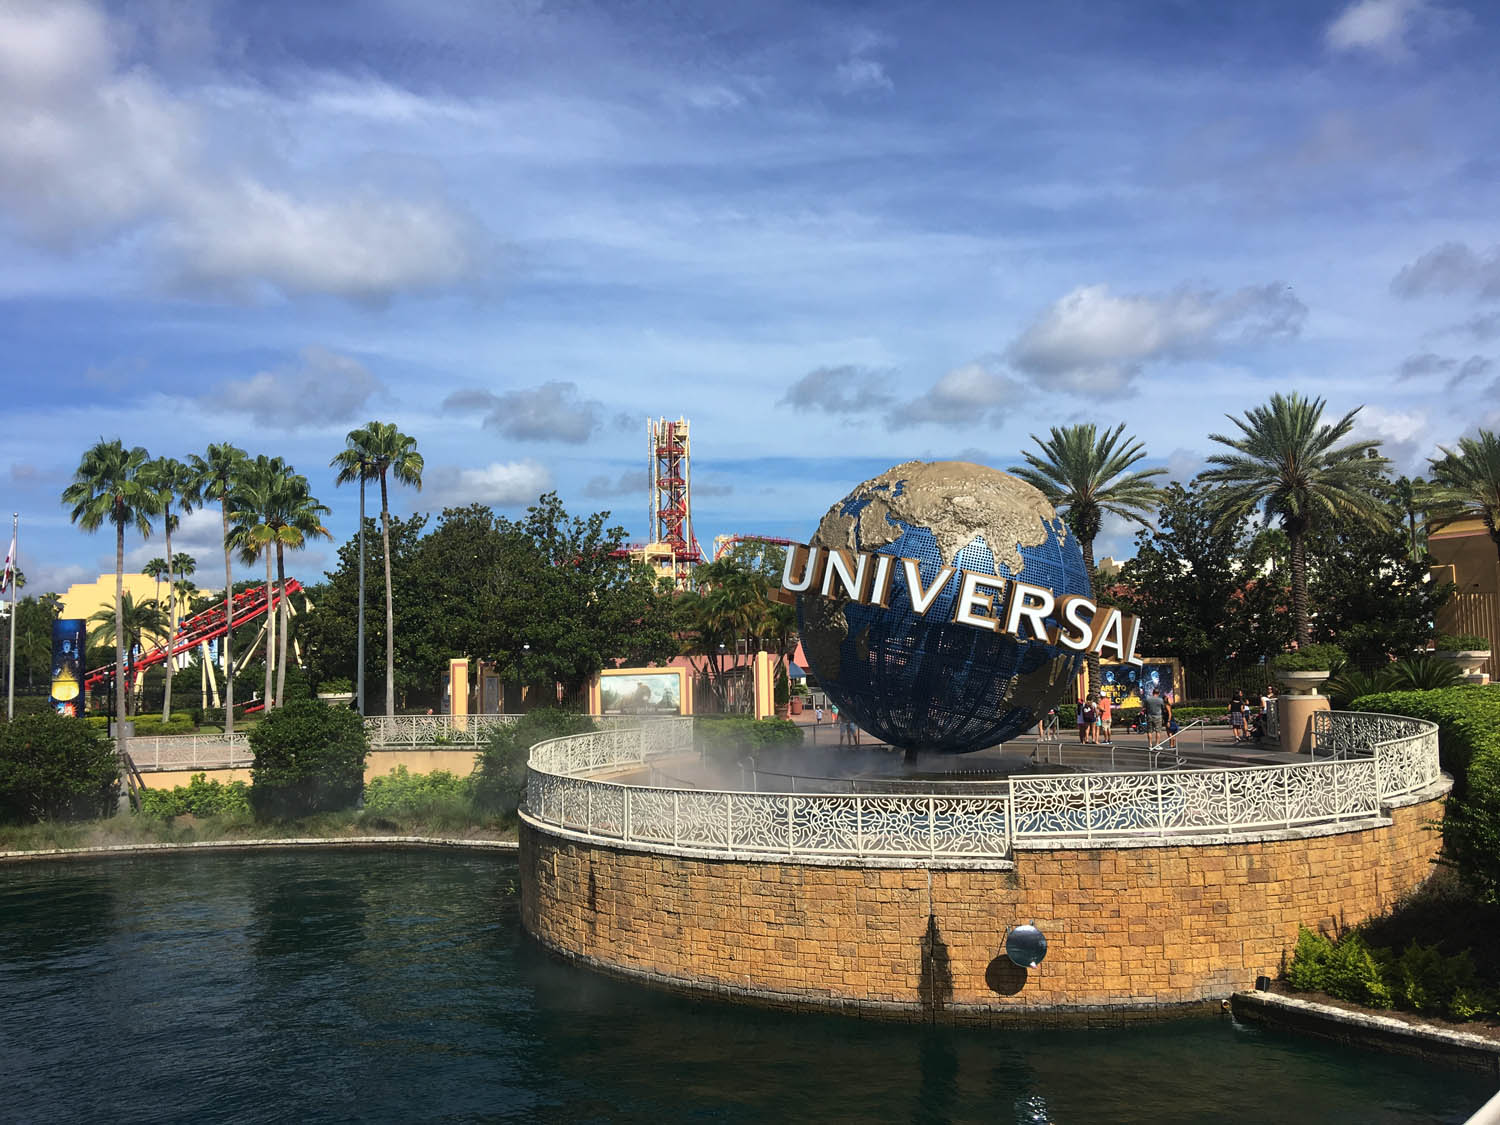 Universal studios Florida